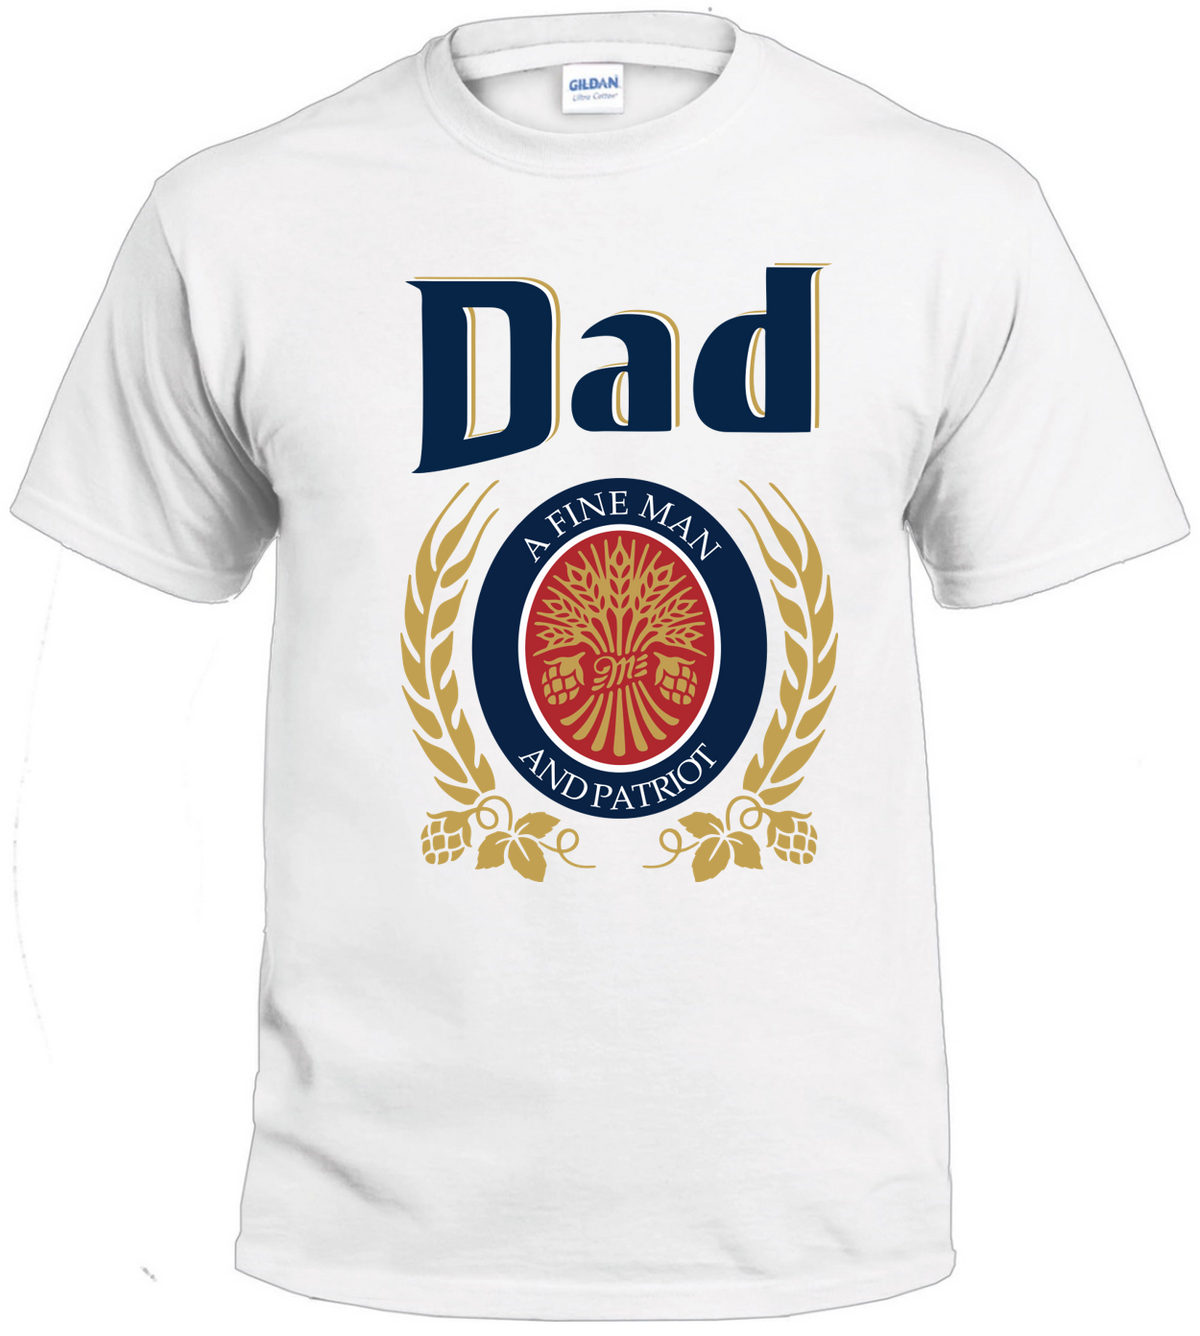 Drinking Dad t-shirt